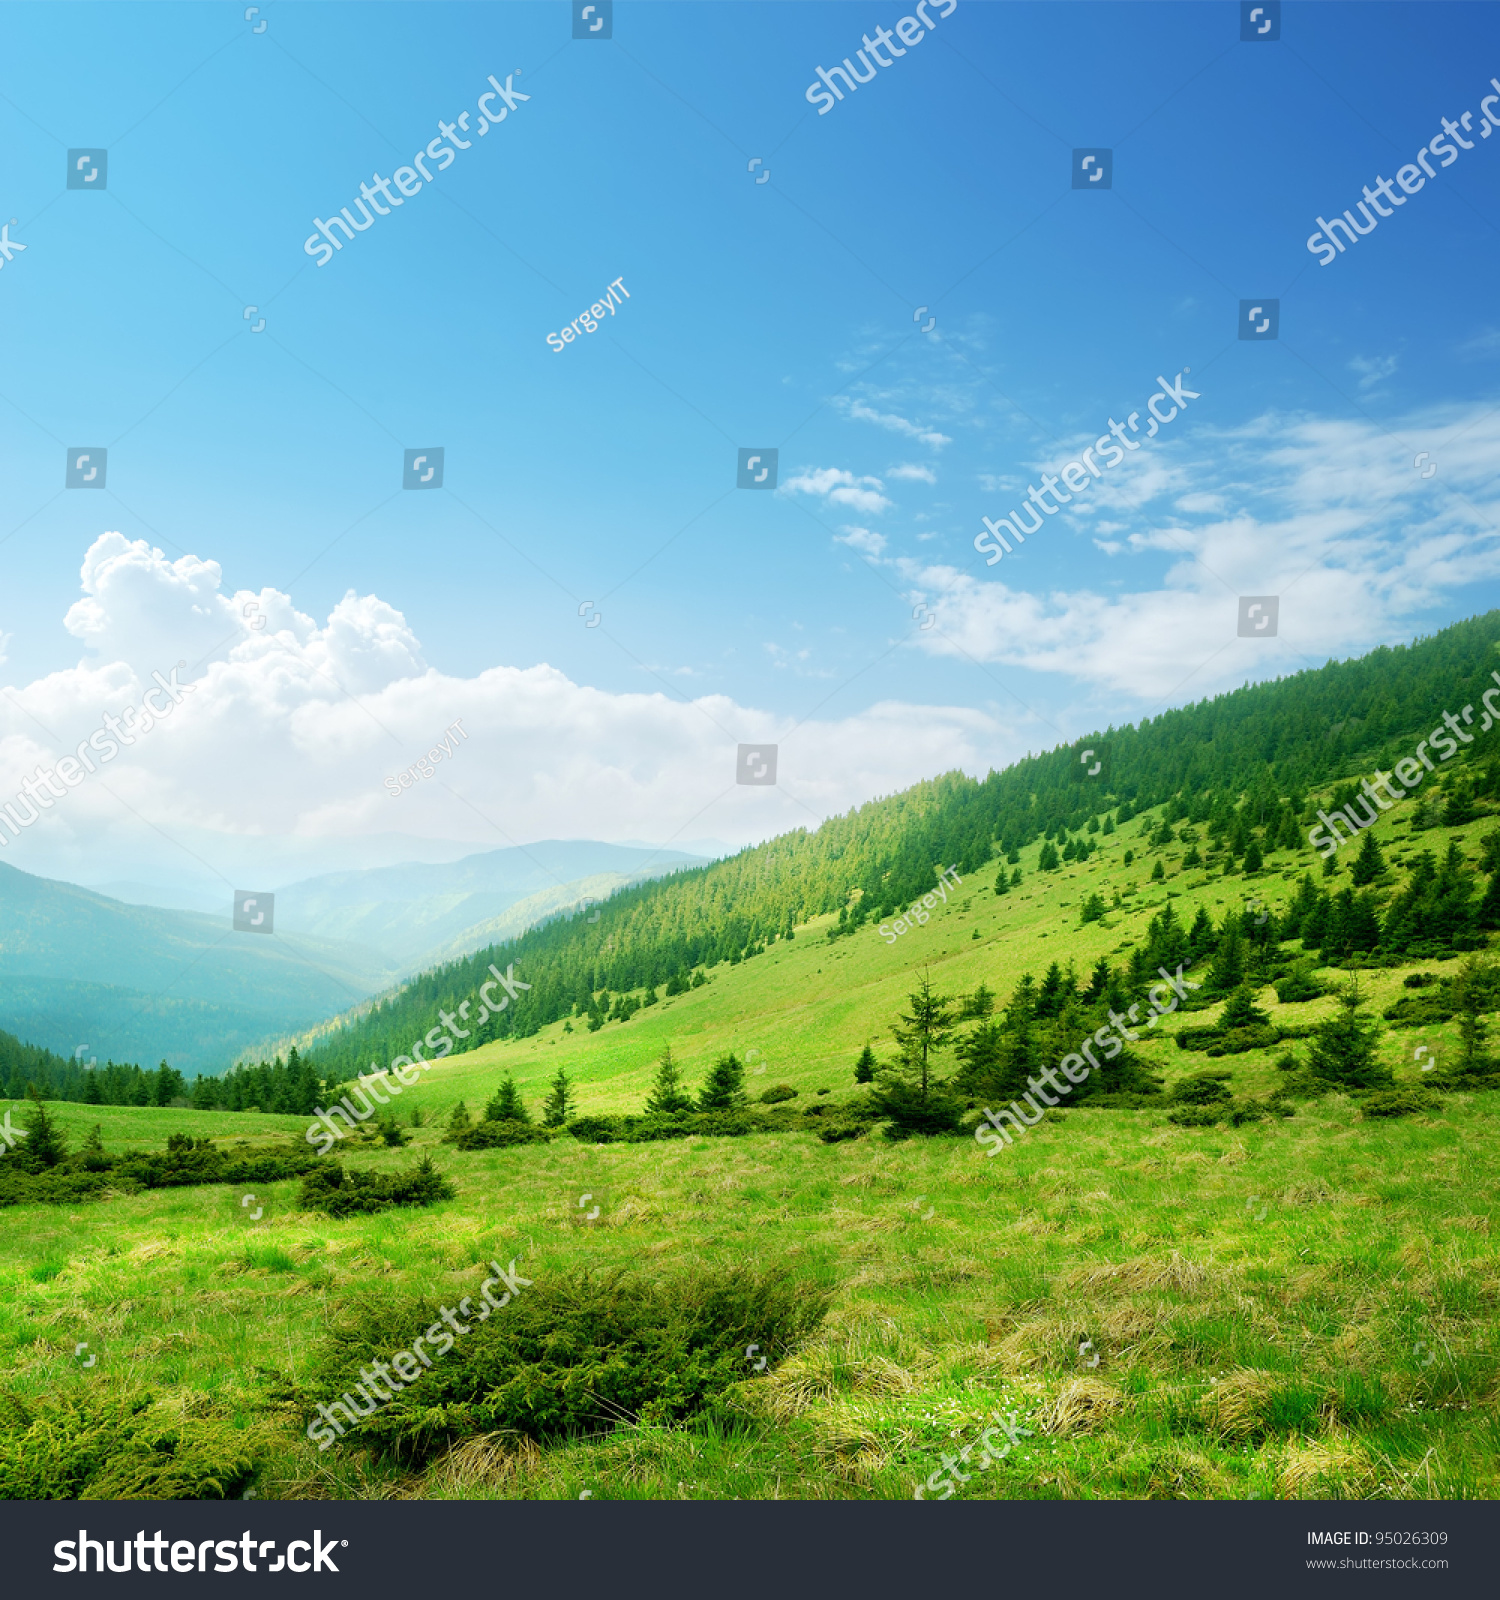 Blue sky and green hills. Summer mountain landscape #95026309